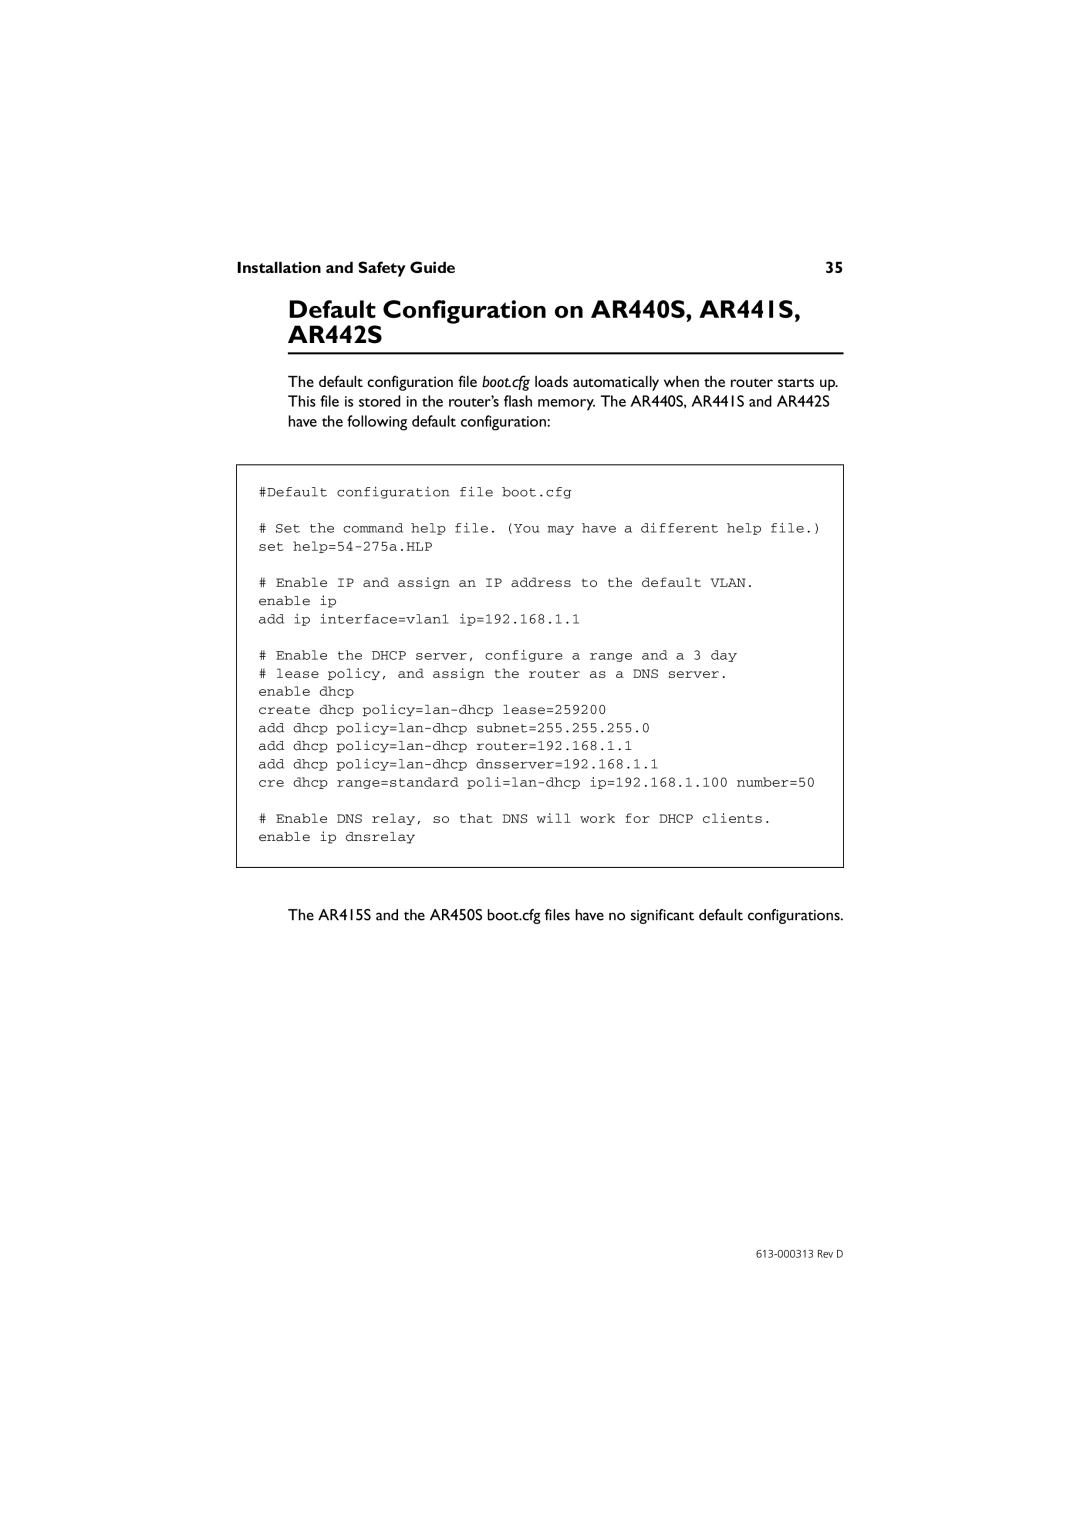 Allied Telesis AR450S, AR415S manual Default Configuration on AR440S, AR441S, AR442S, Installation and Safety Guide 